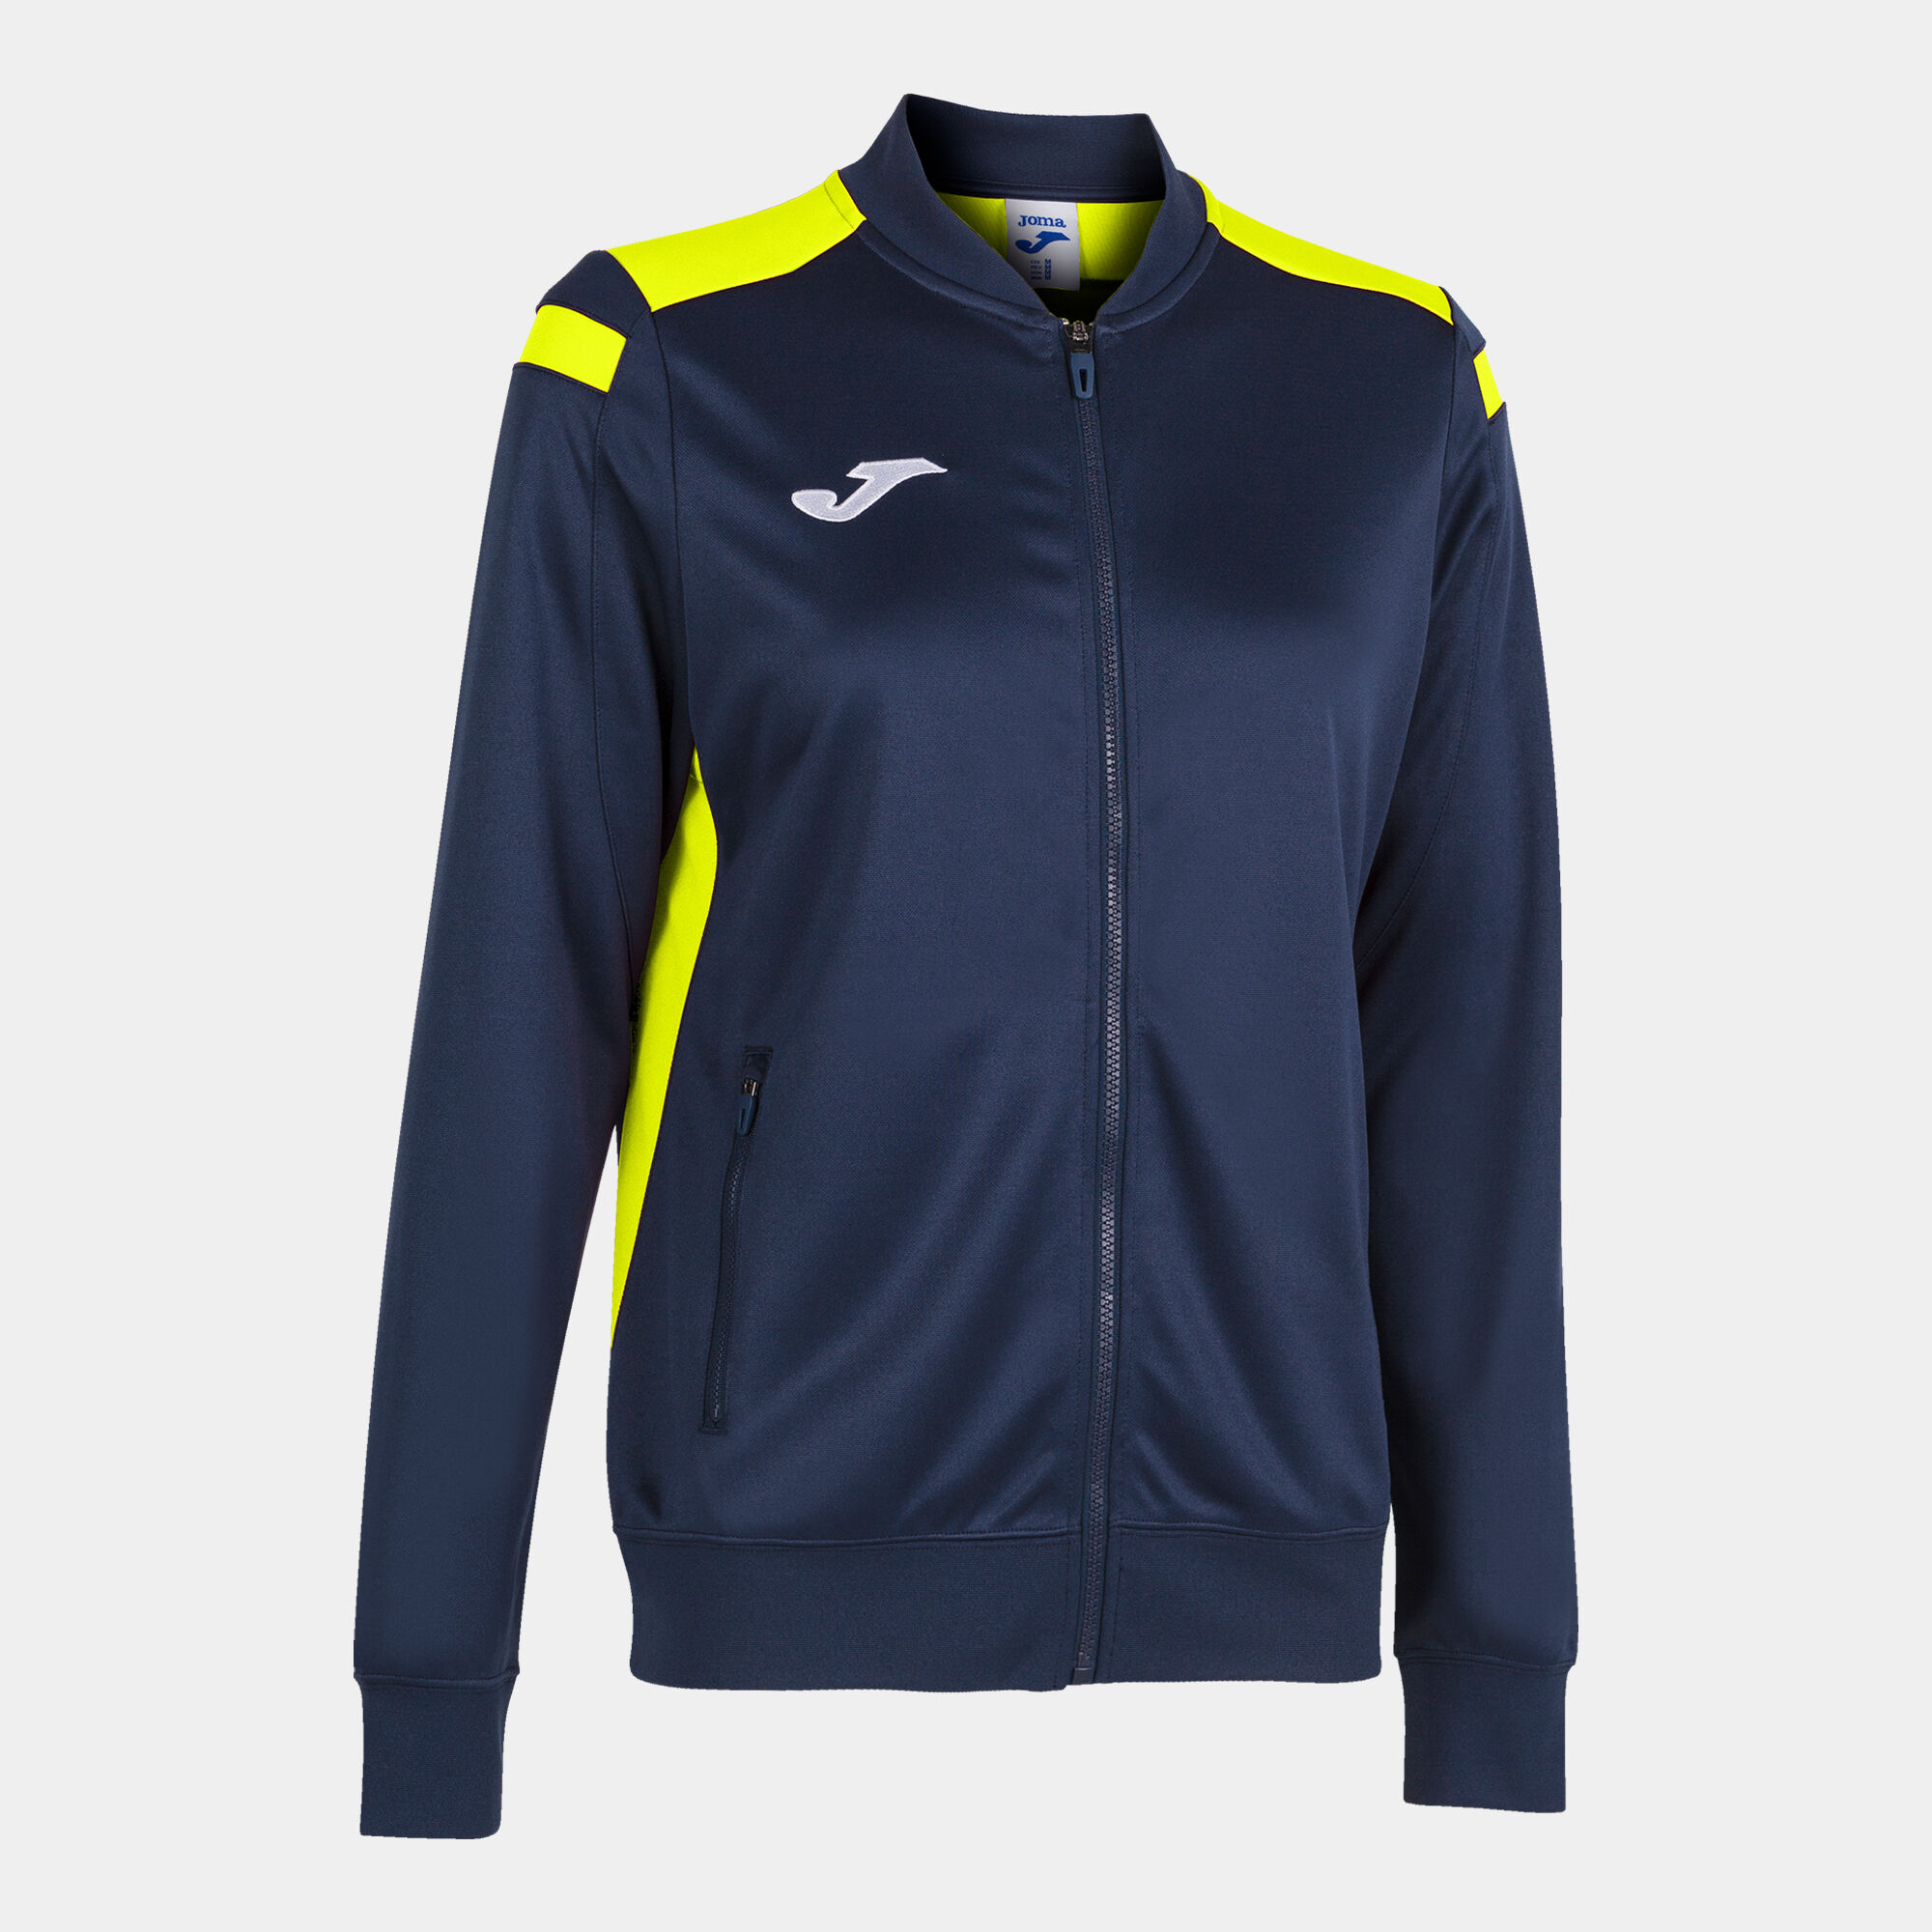 Jacket woman Championship VI navy blue fluorescent yellow